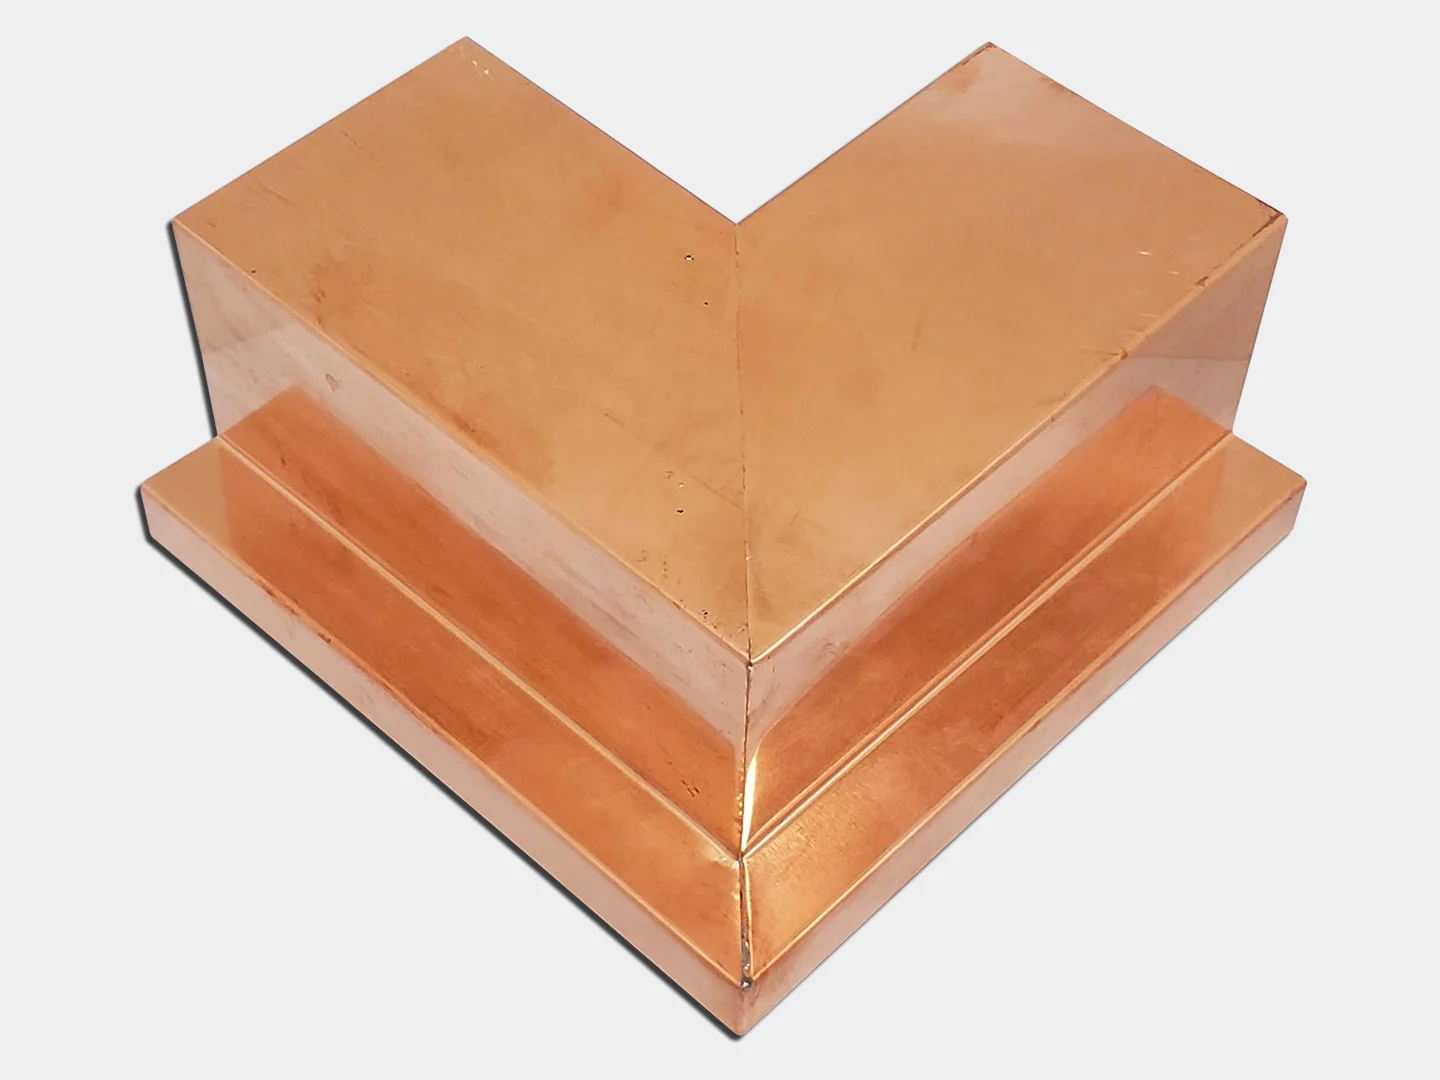 Commercial copper box gutter miter